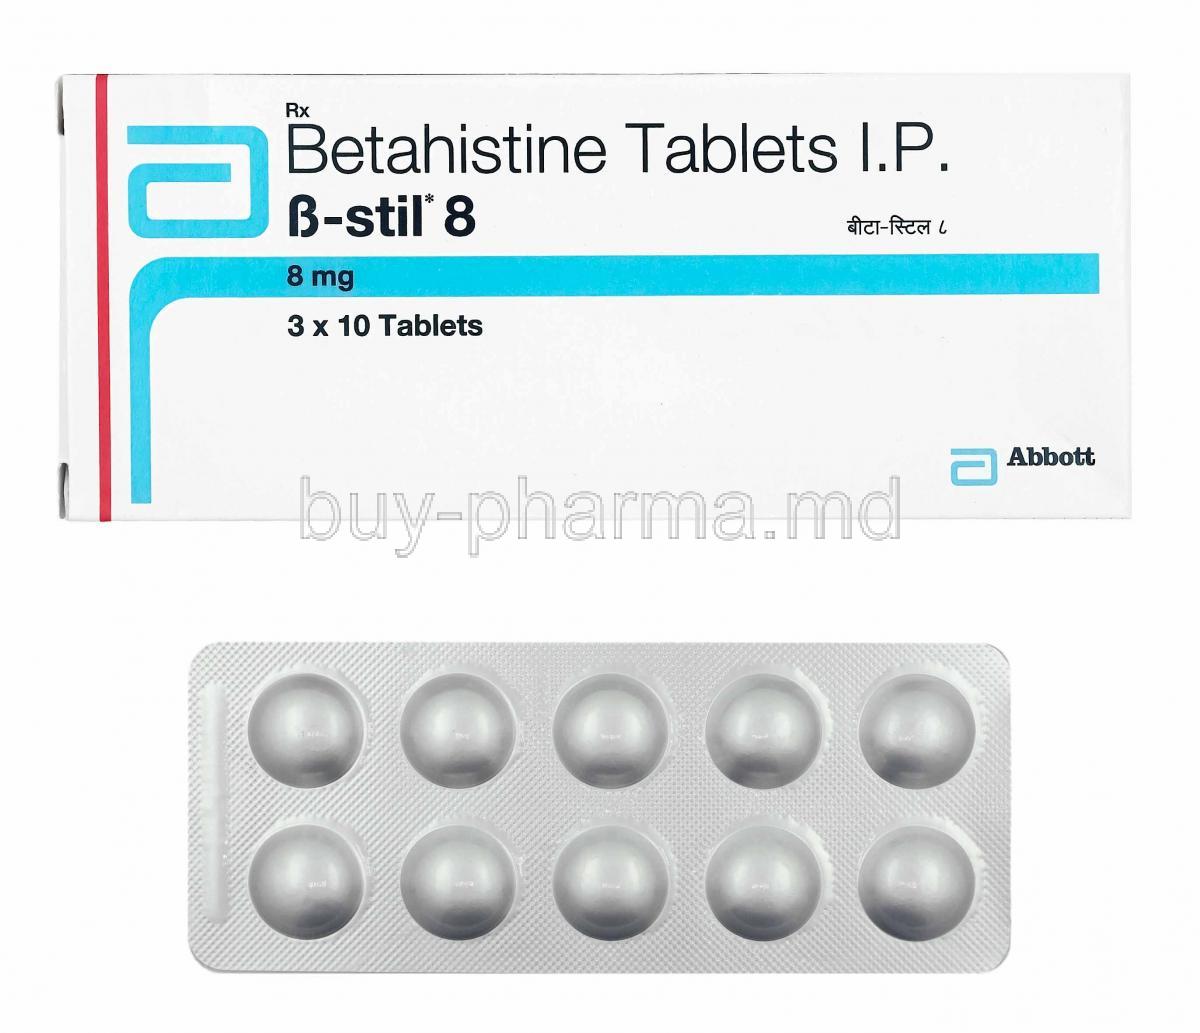 B-Stil, Betahistine 8mg box and tablets